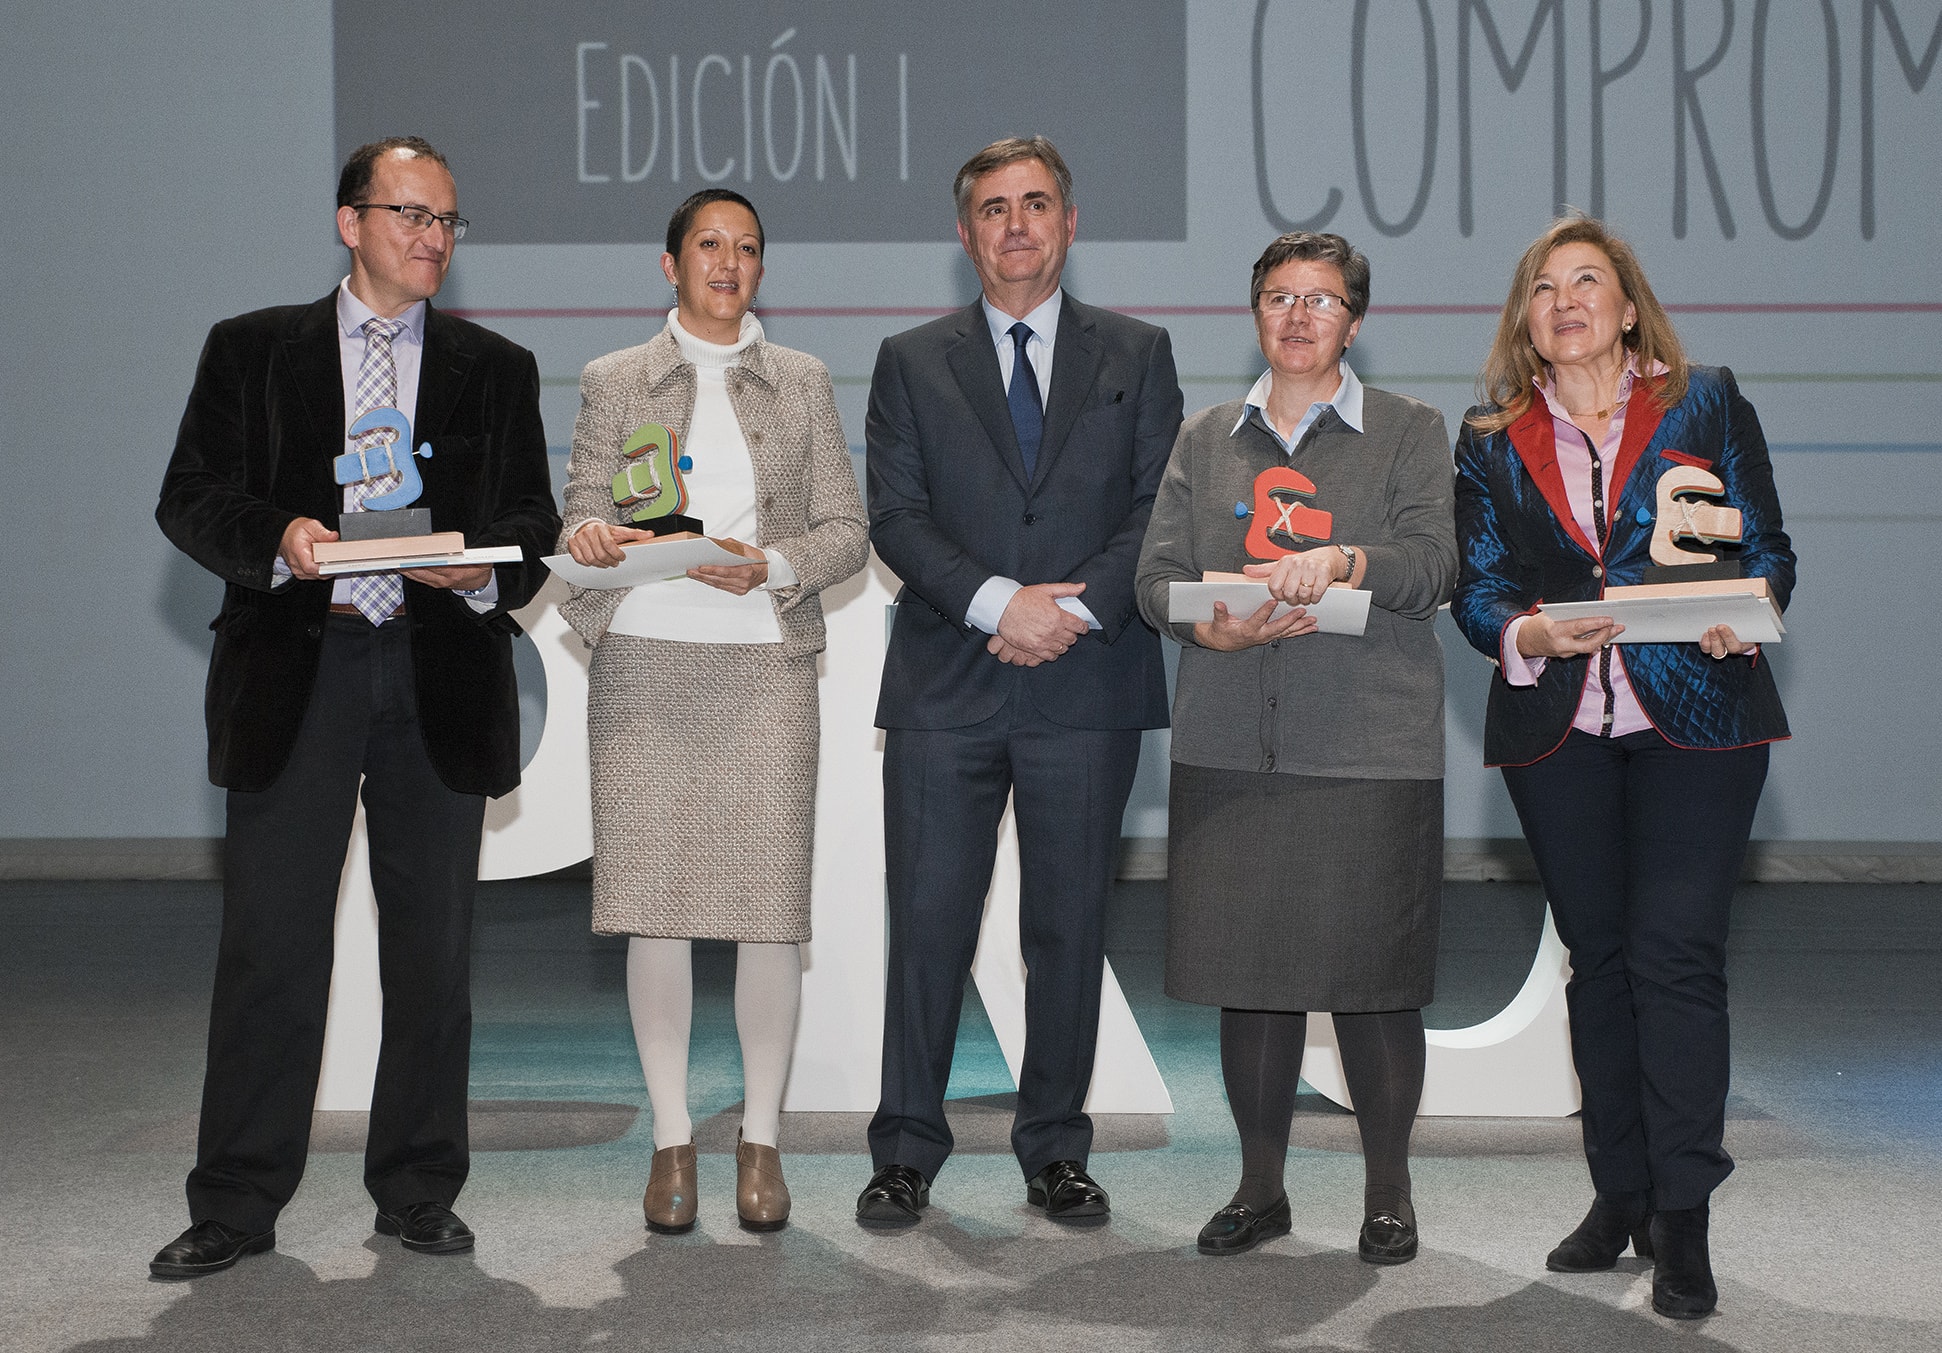 Premios Compromiso Edición 1. 2015